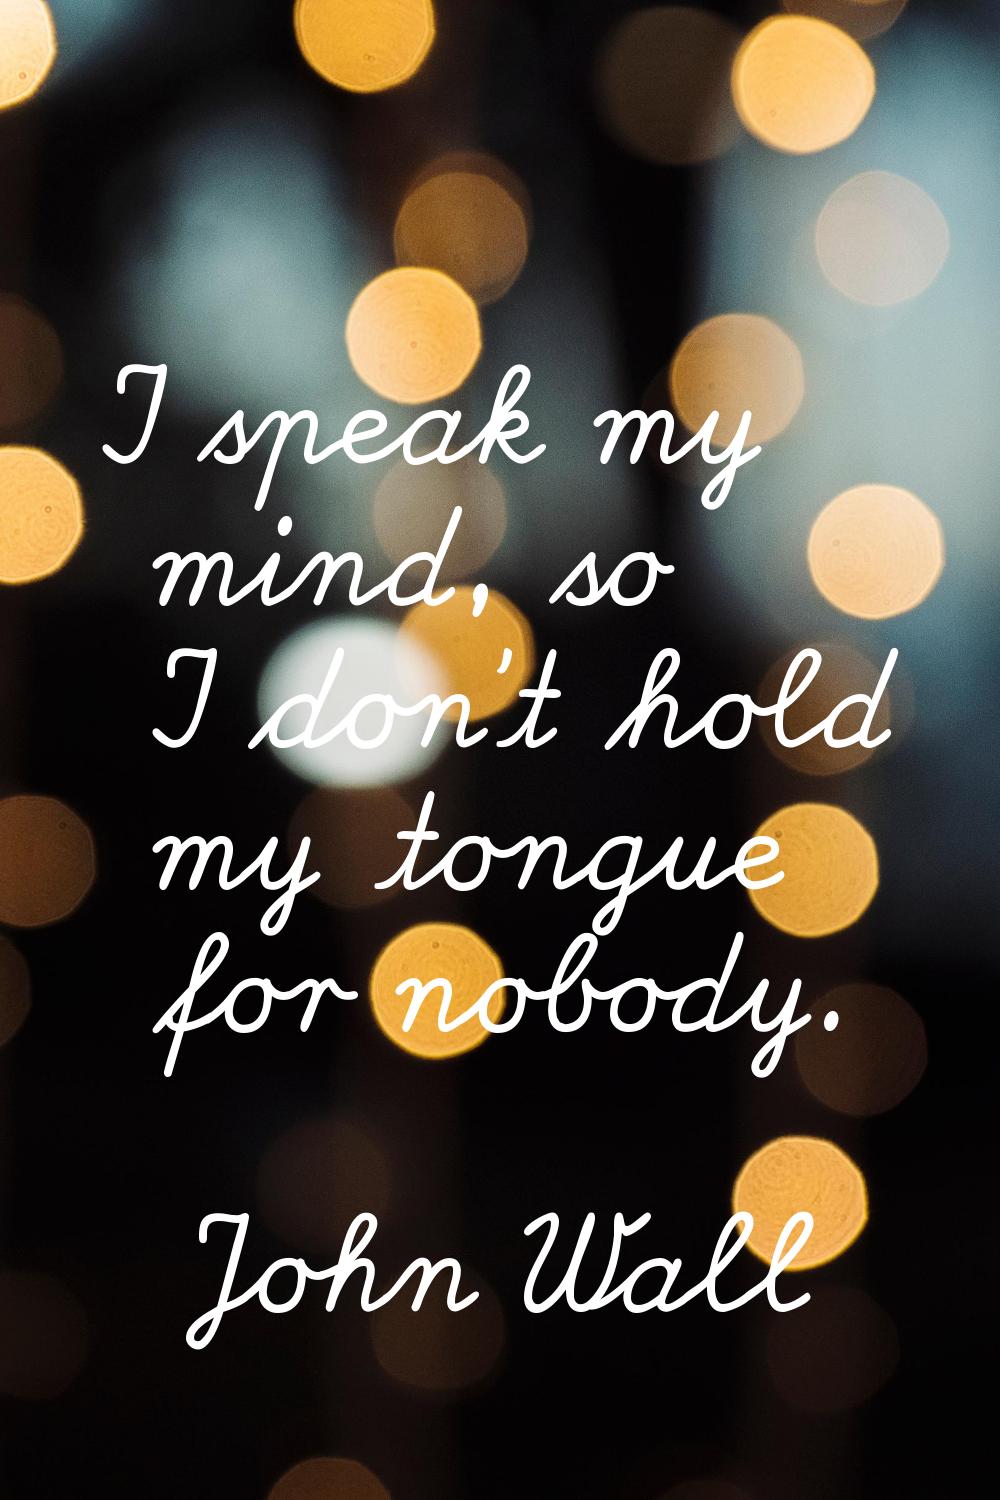 I speak my mind, so I don't hold my tongue for nobody.